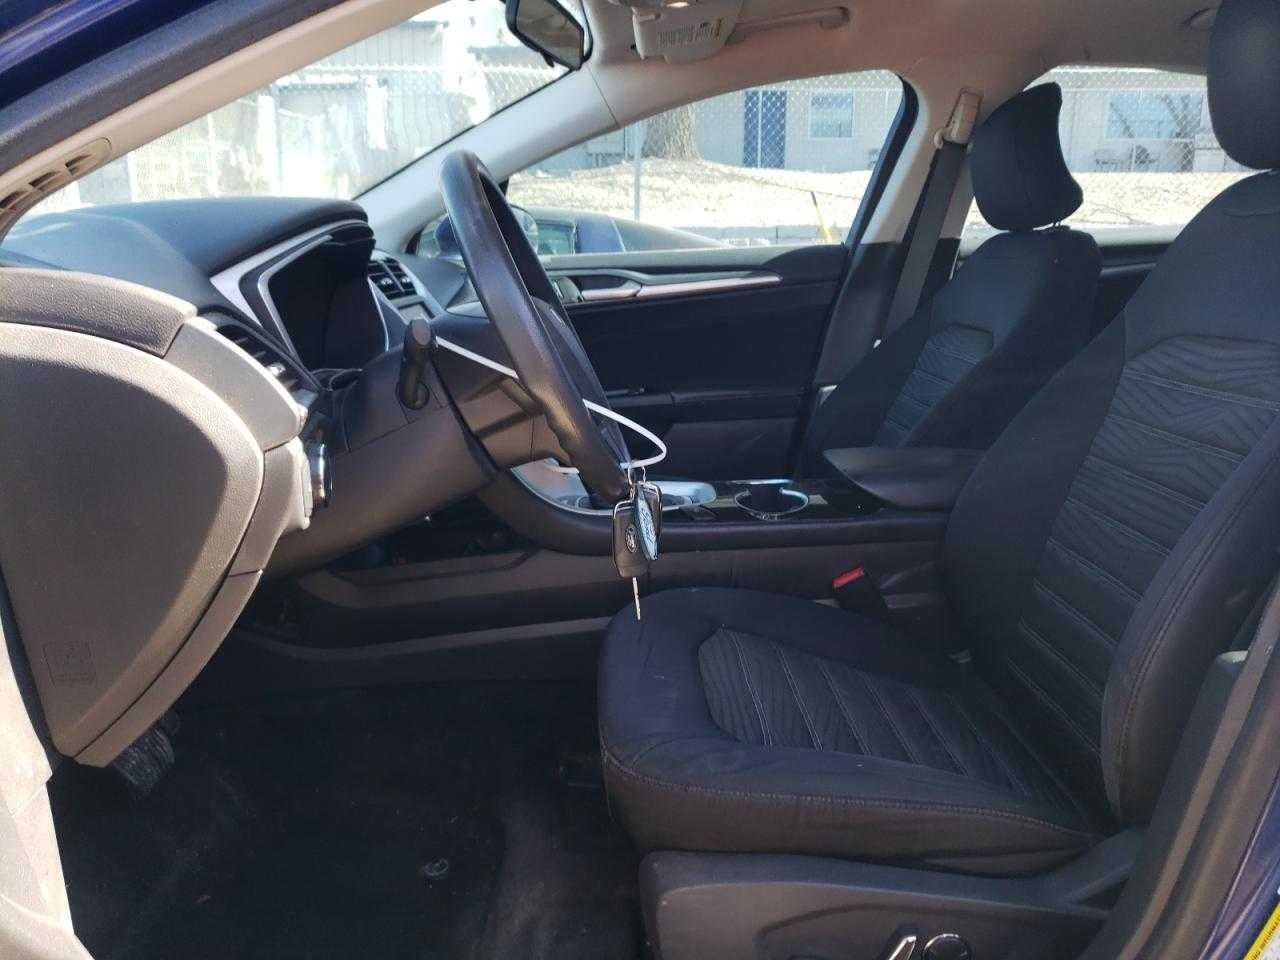 Ford Fusion SE 2016